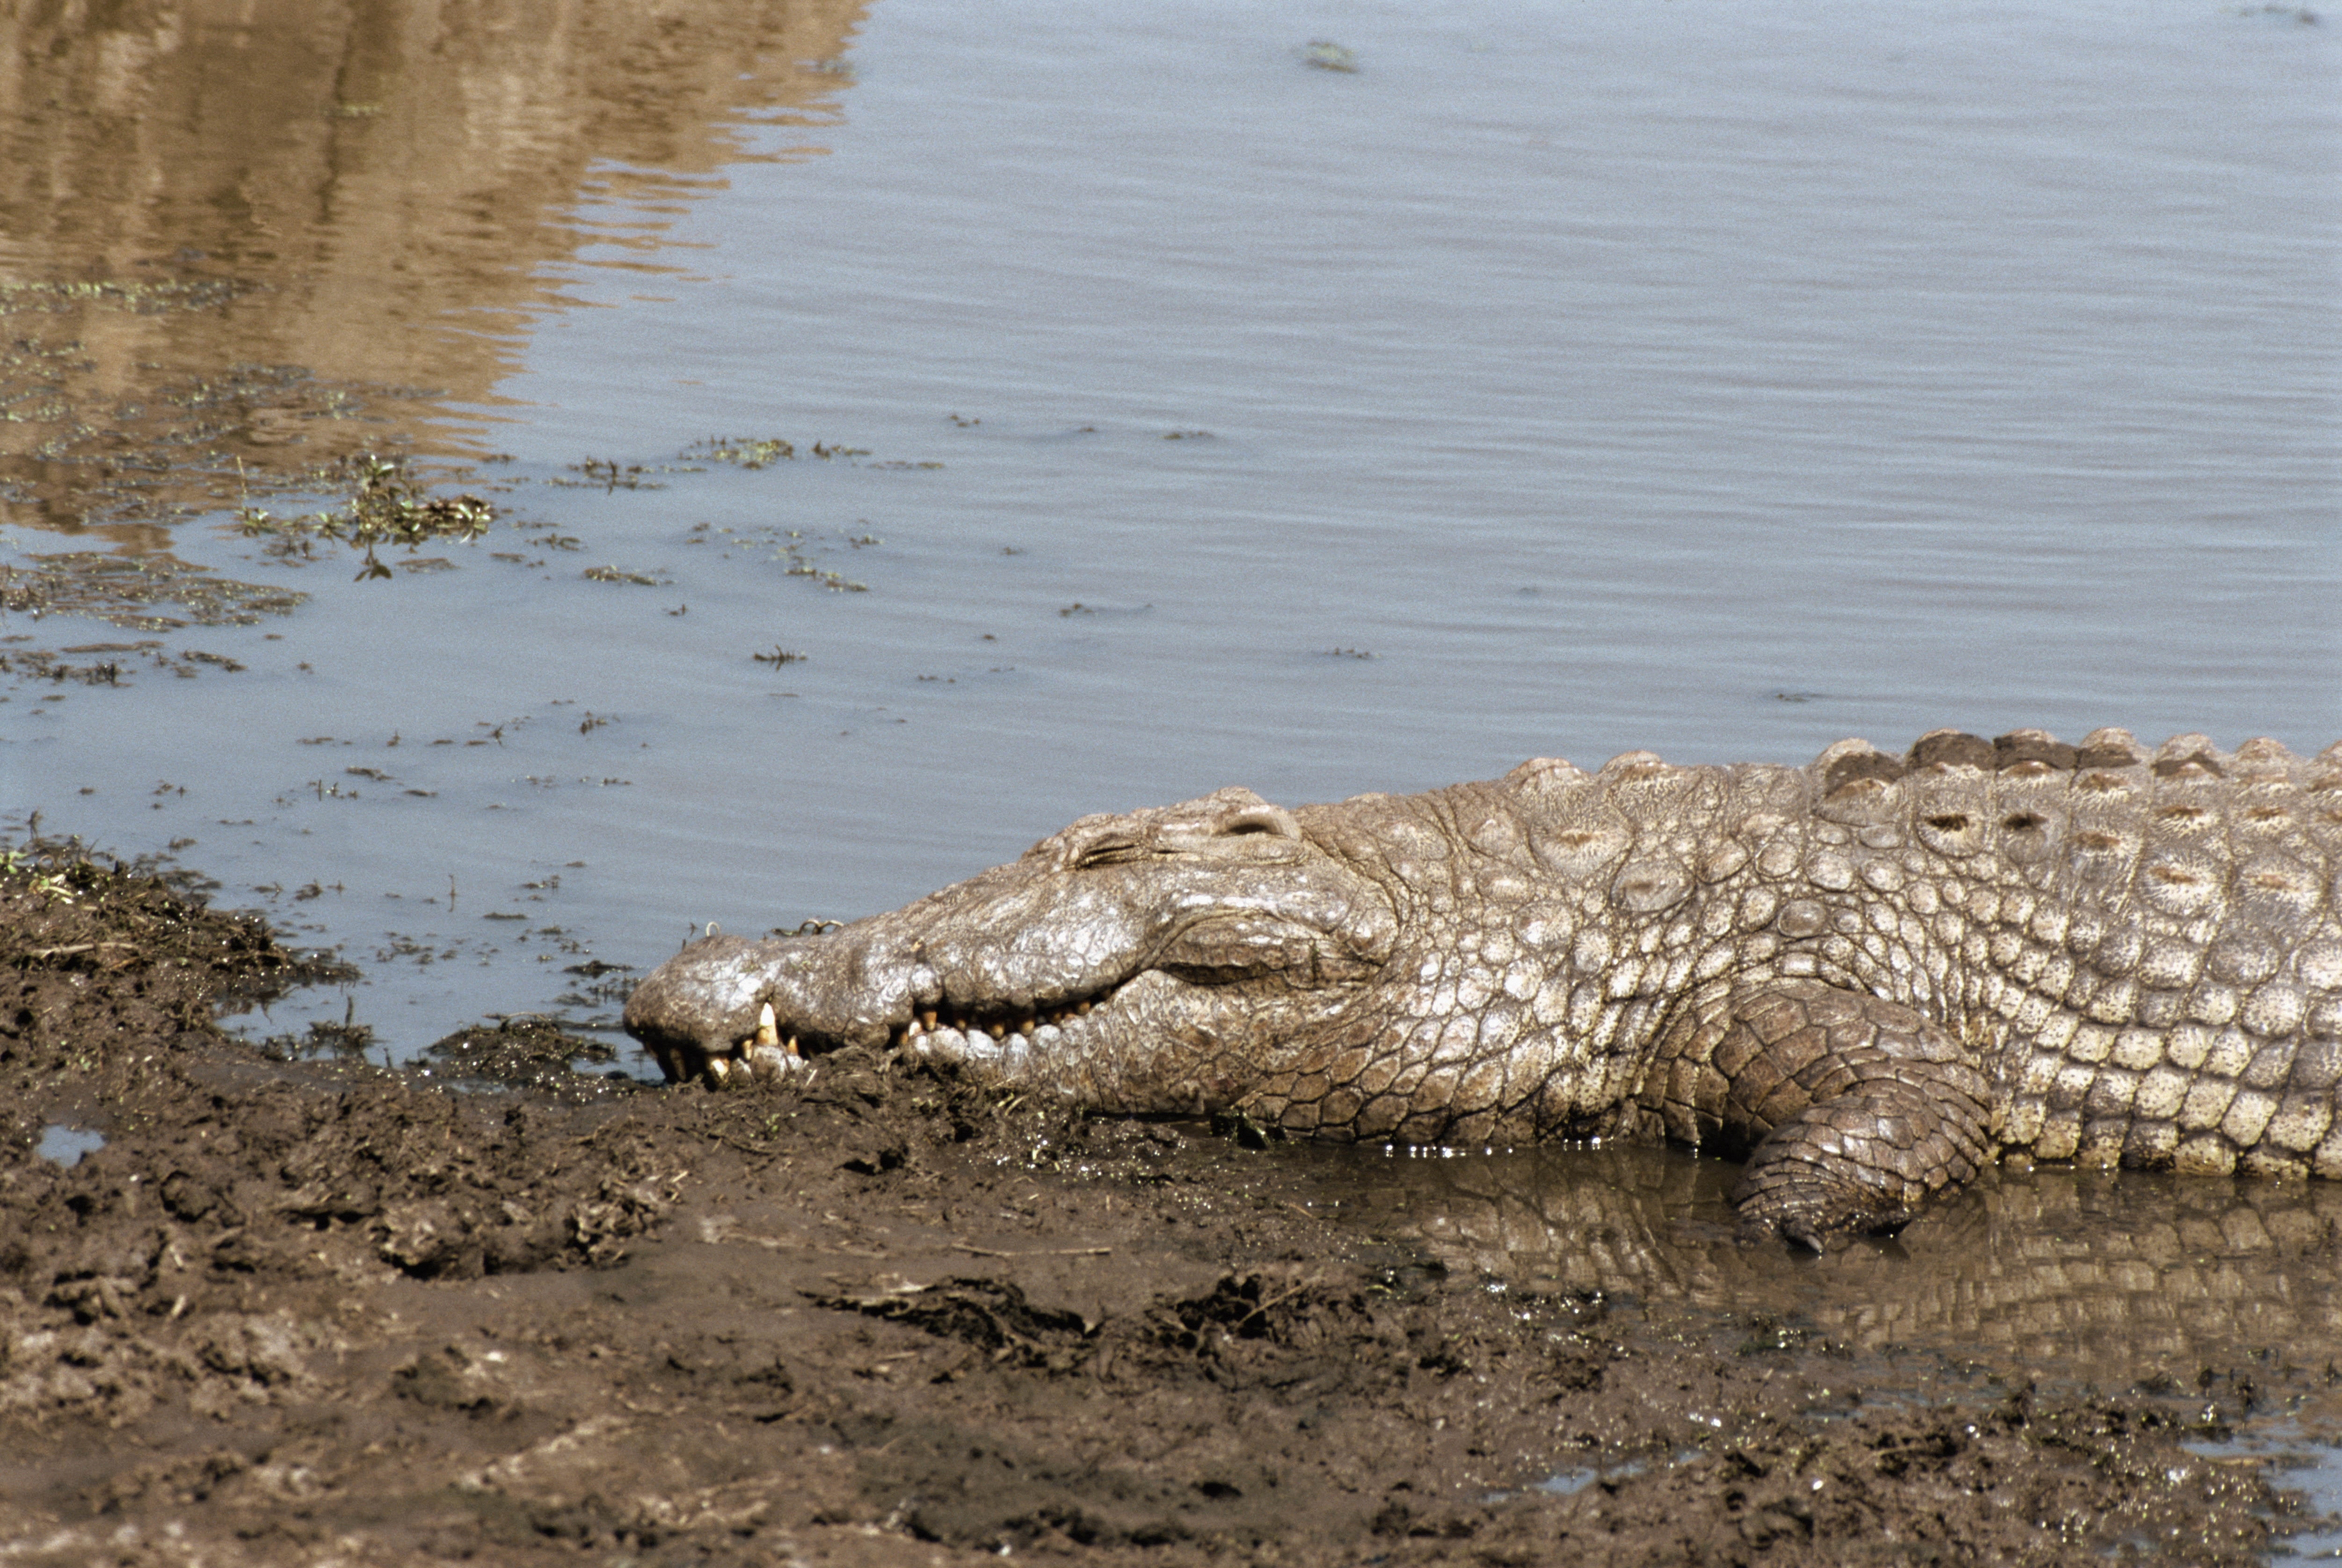 gray crocodile, shore, water, tanning, sun, animal, reptile, wildlife